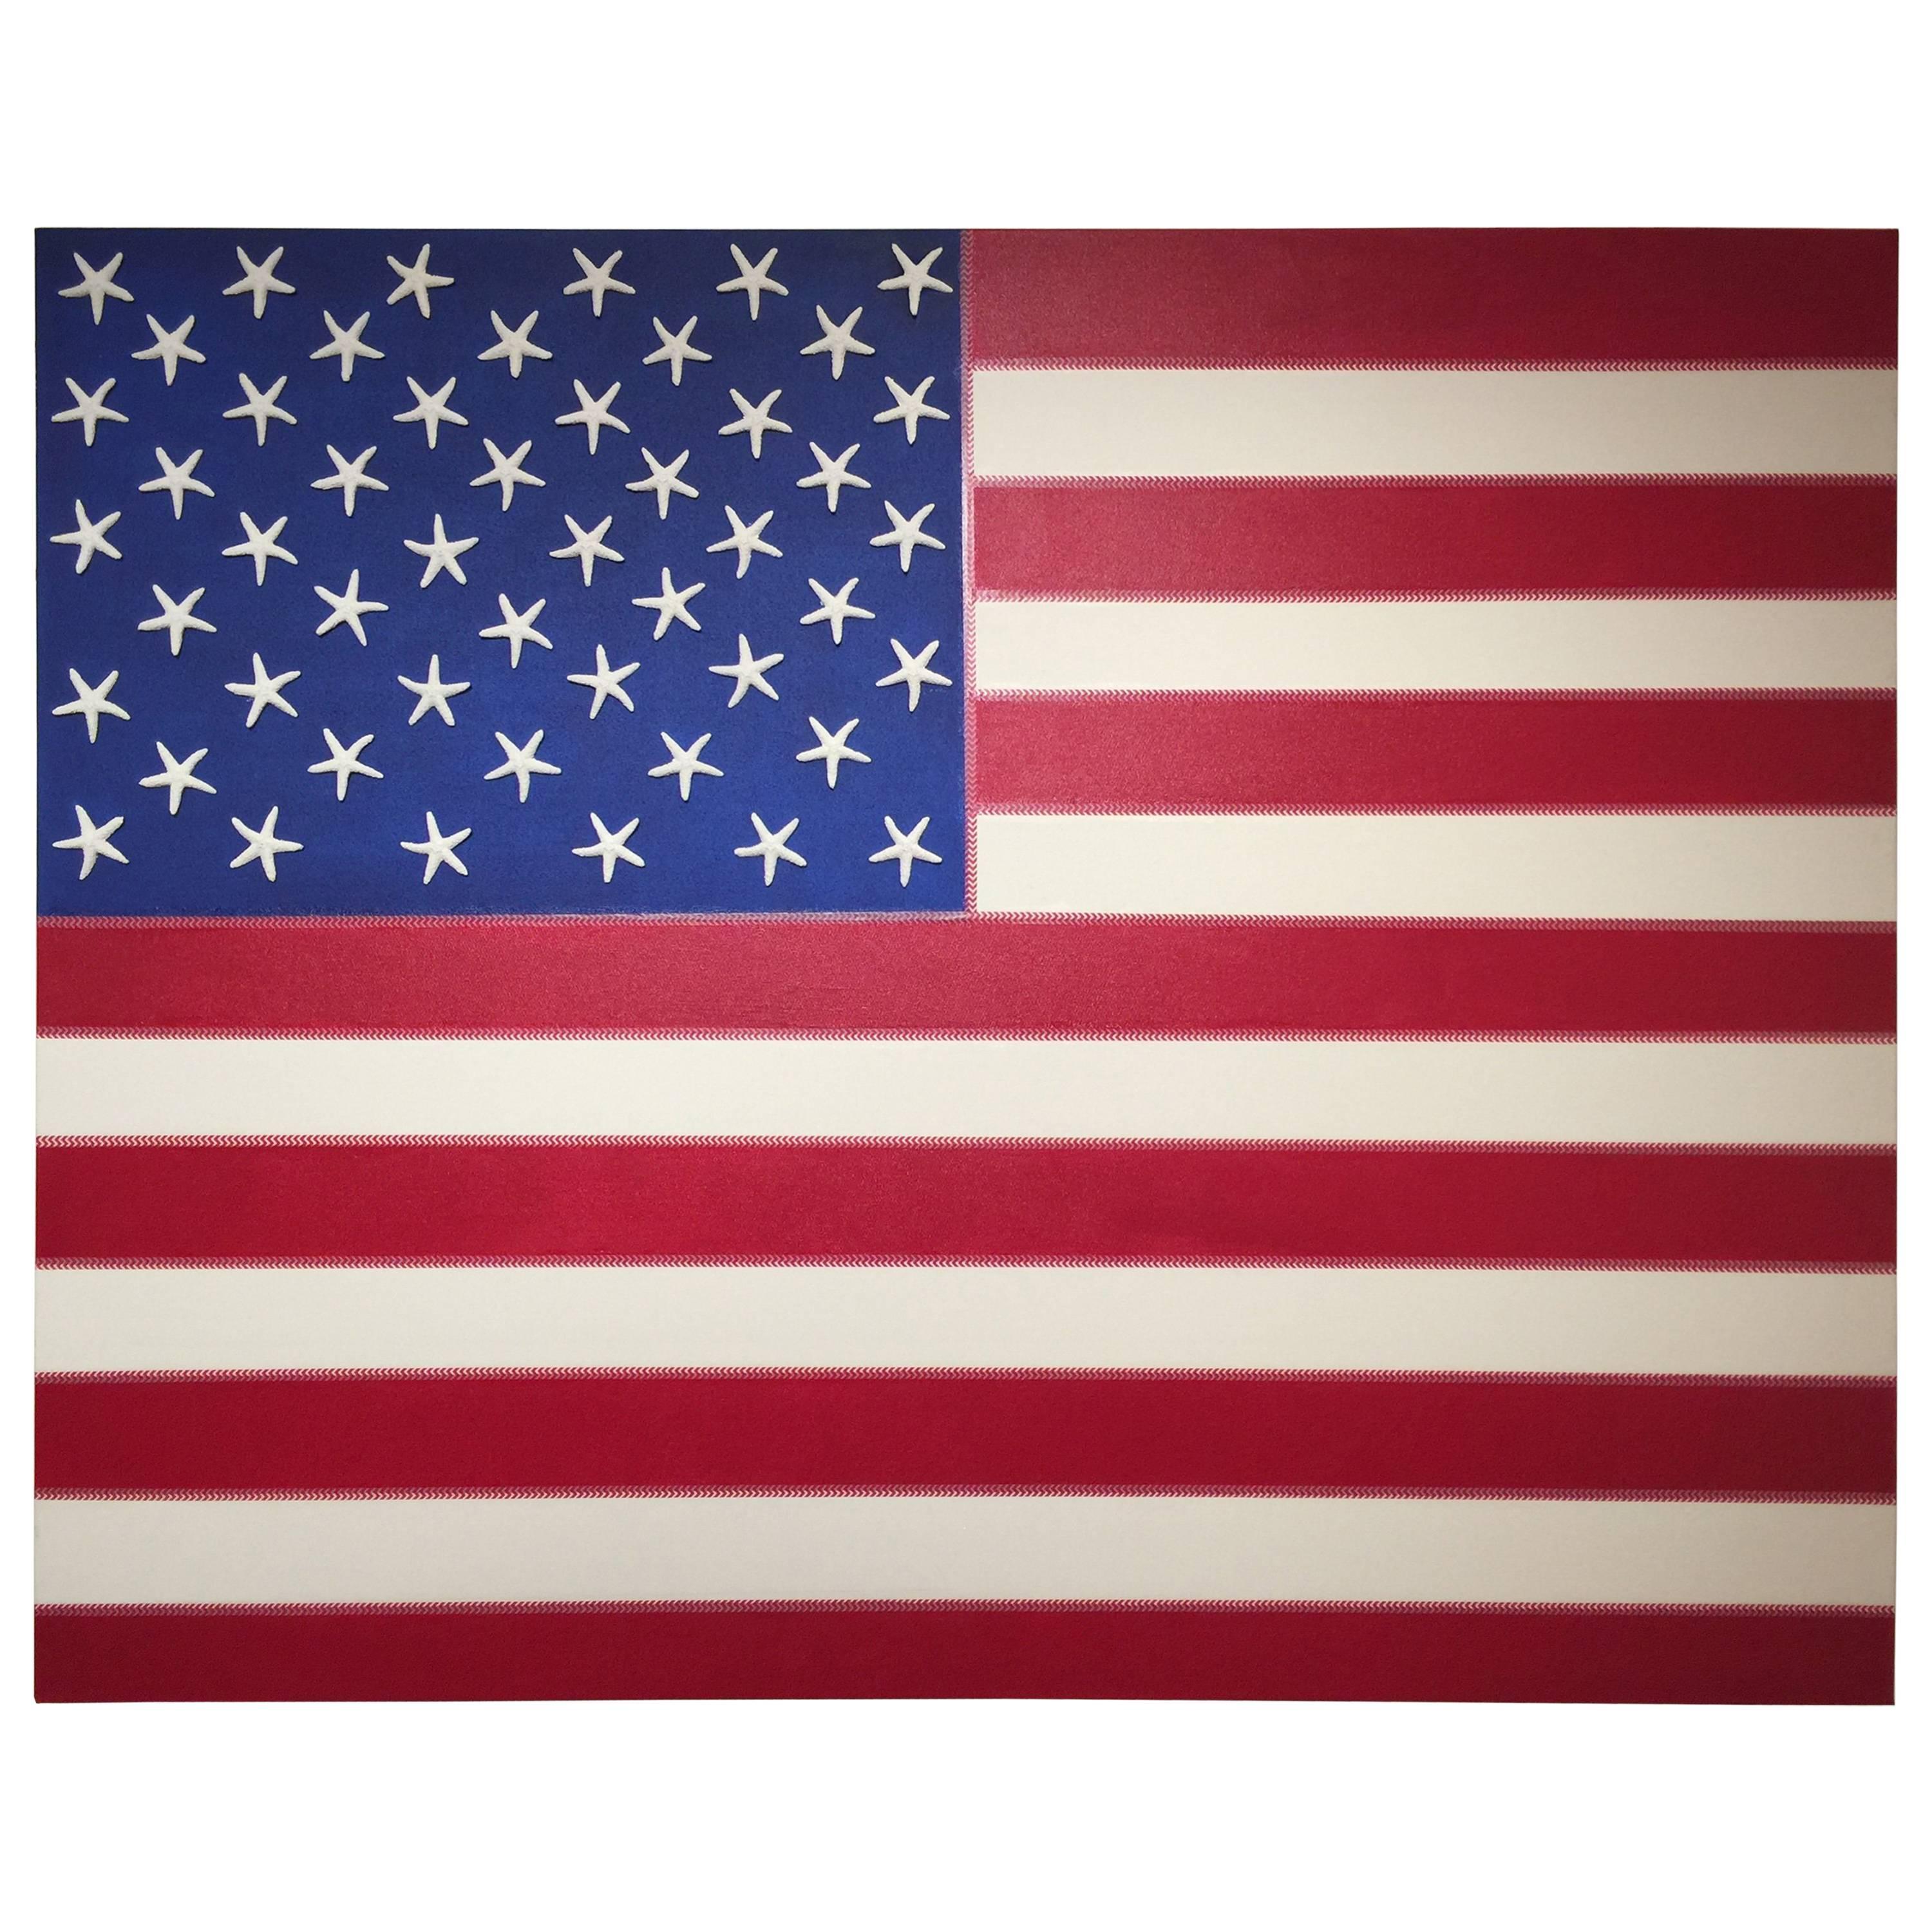 J. WOHNSEIDLER American Flag No. 1, 2017 Acrylic on Canvas